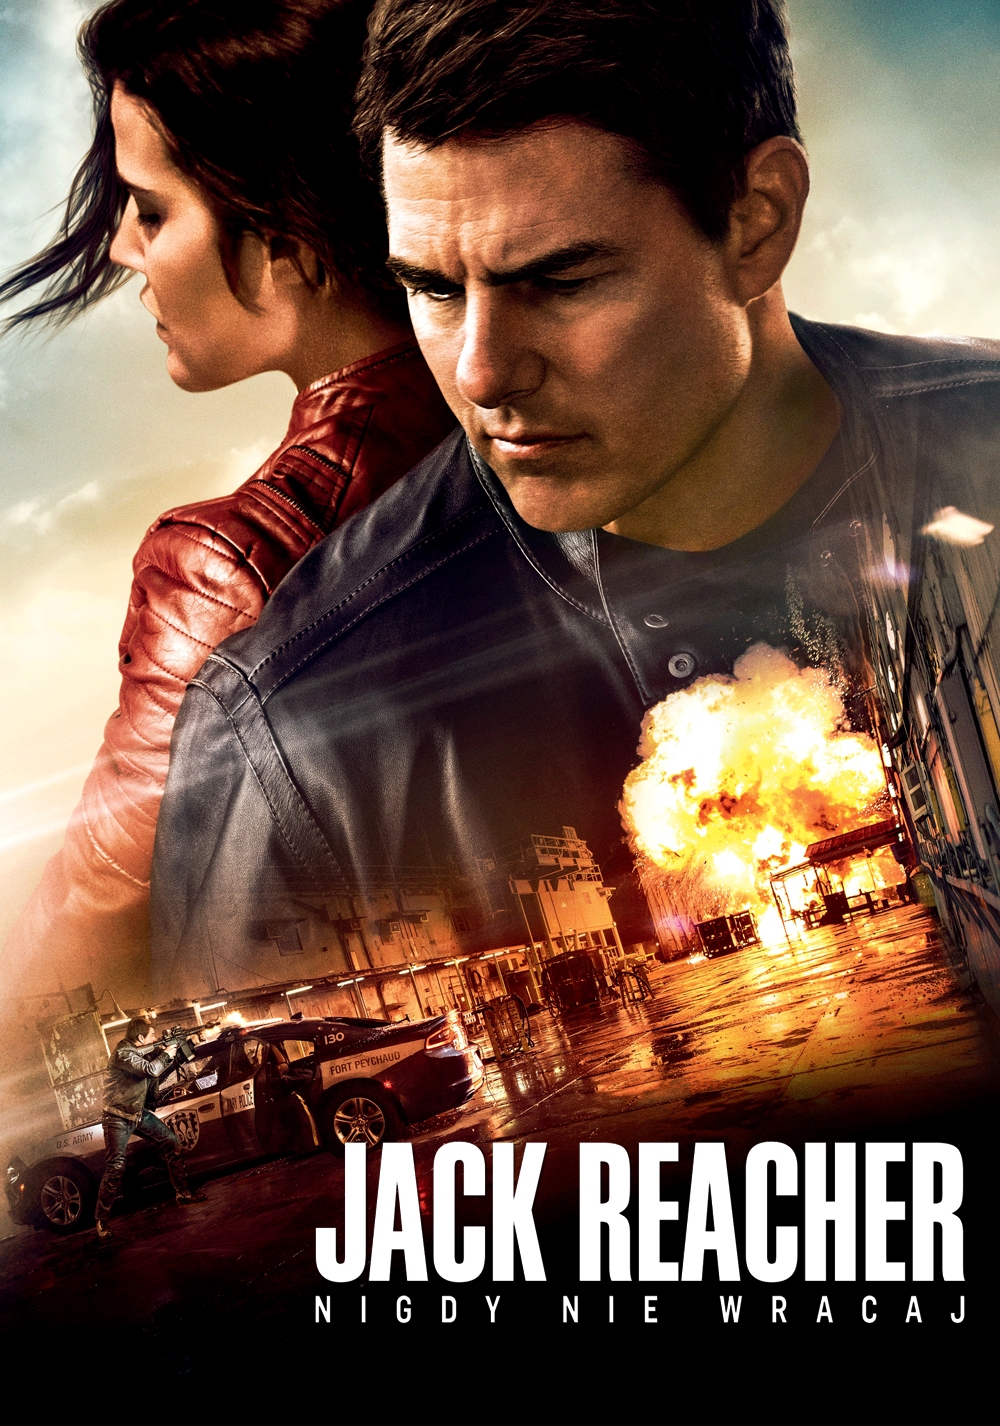 Jack Reacher: Never Go Back Picture